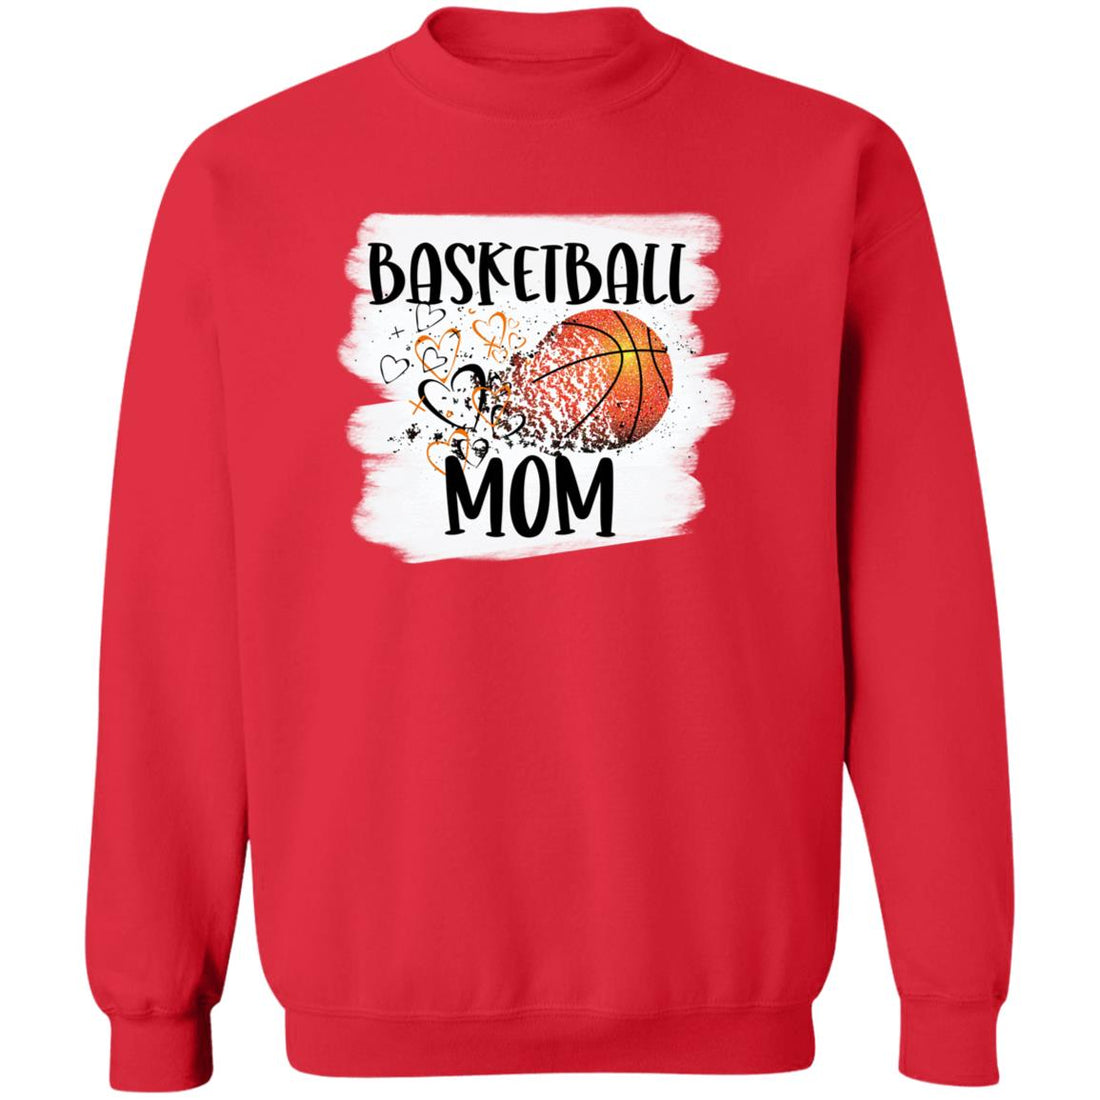 Basketball Mom Crewneck Pullover Sweatshirt - Sweatshirts - Positively Sassy - Basketball Mom Crewneck Pullover Sweatshirt